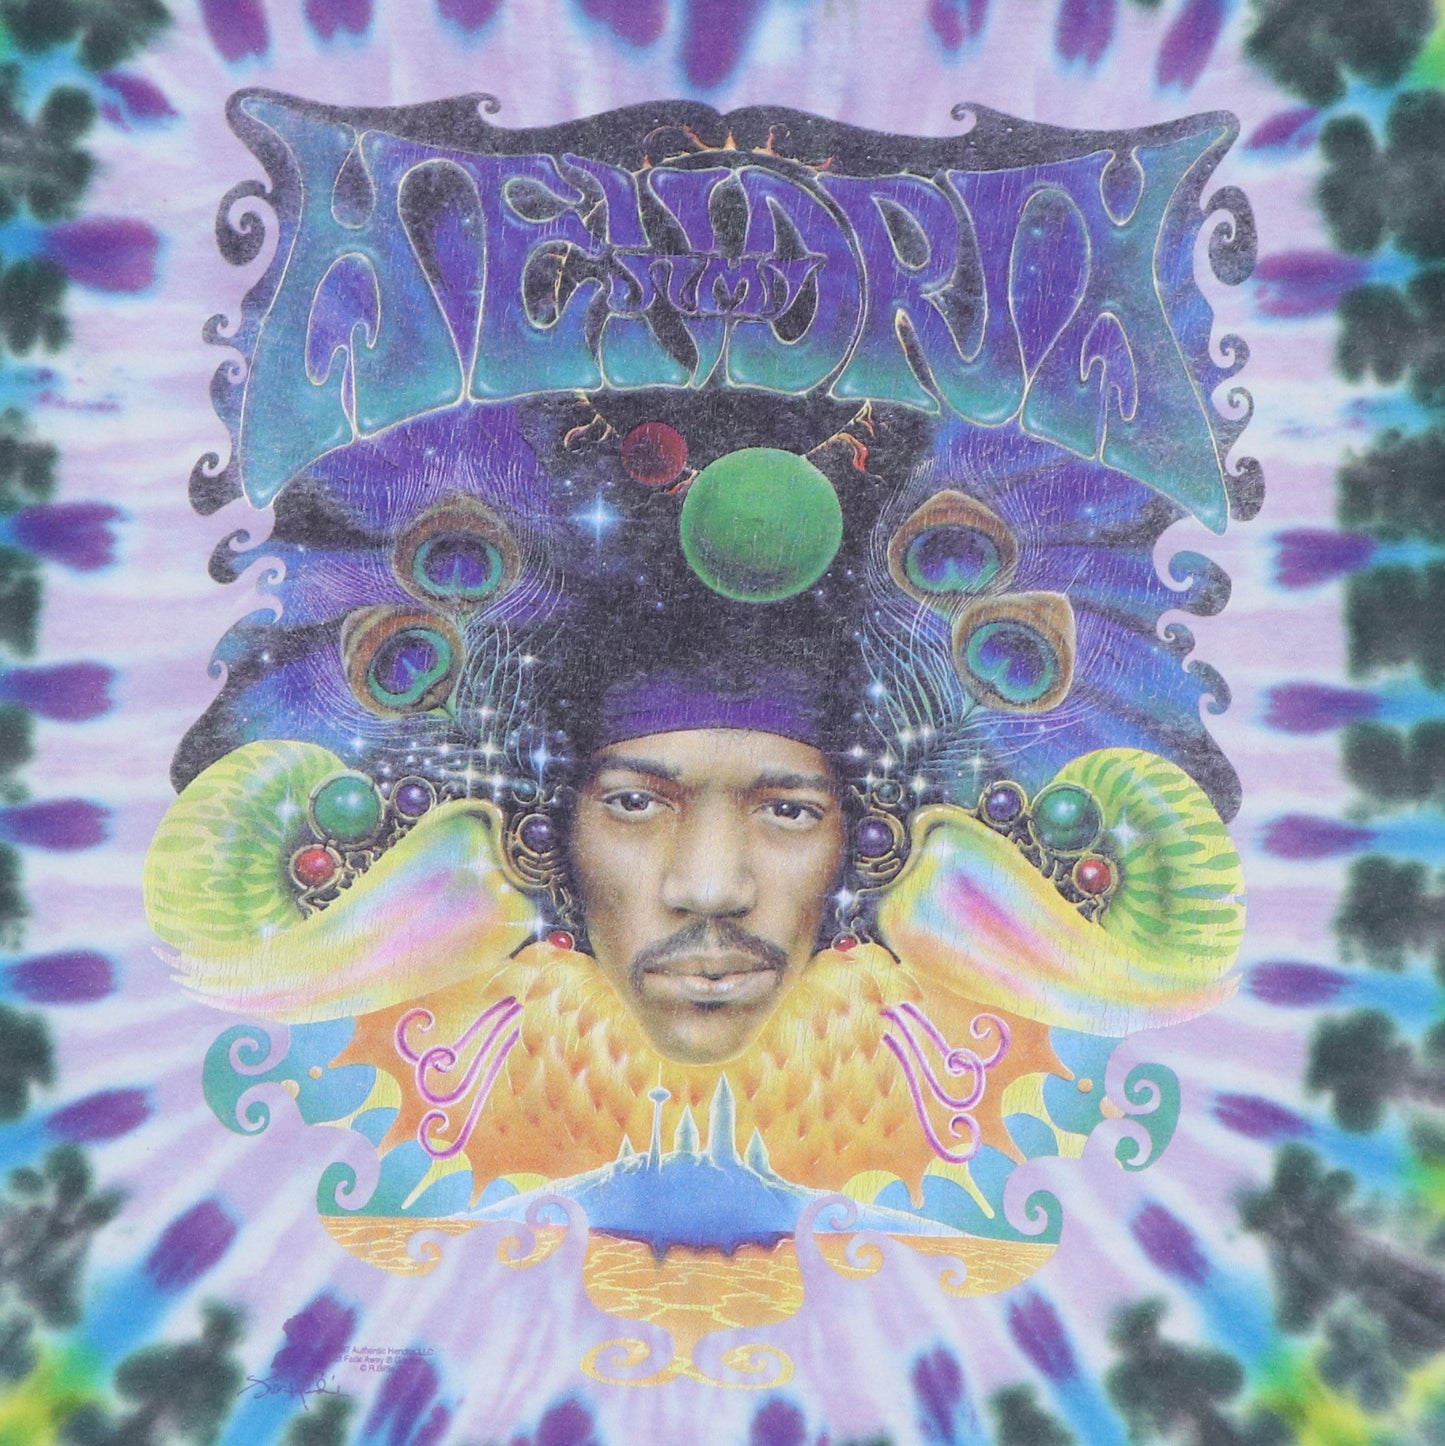 1997 Jimi Hendrix Tie Dye Shirt